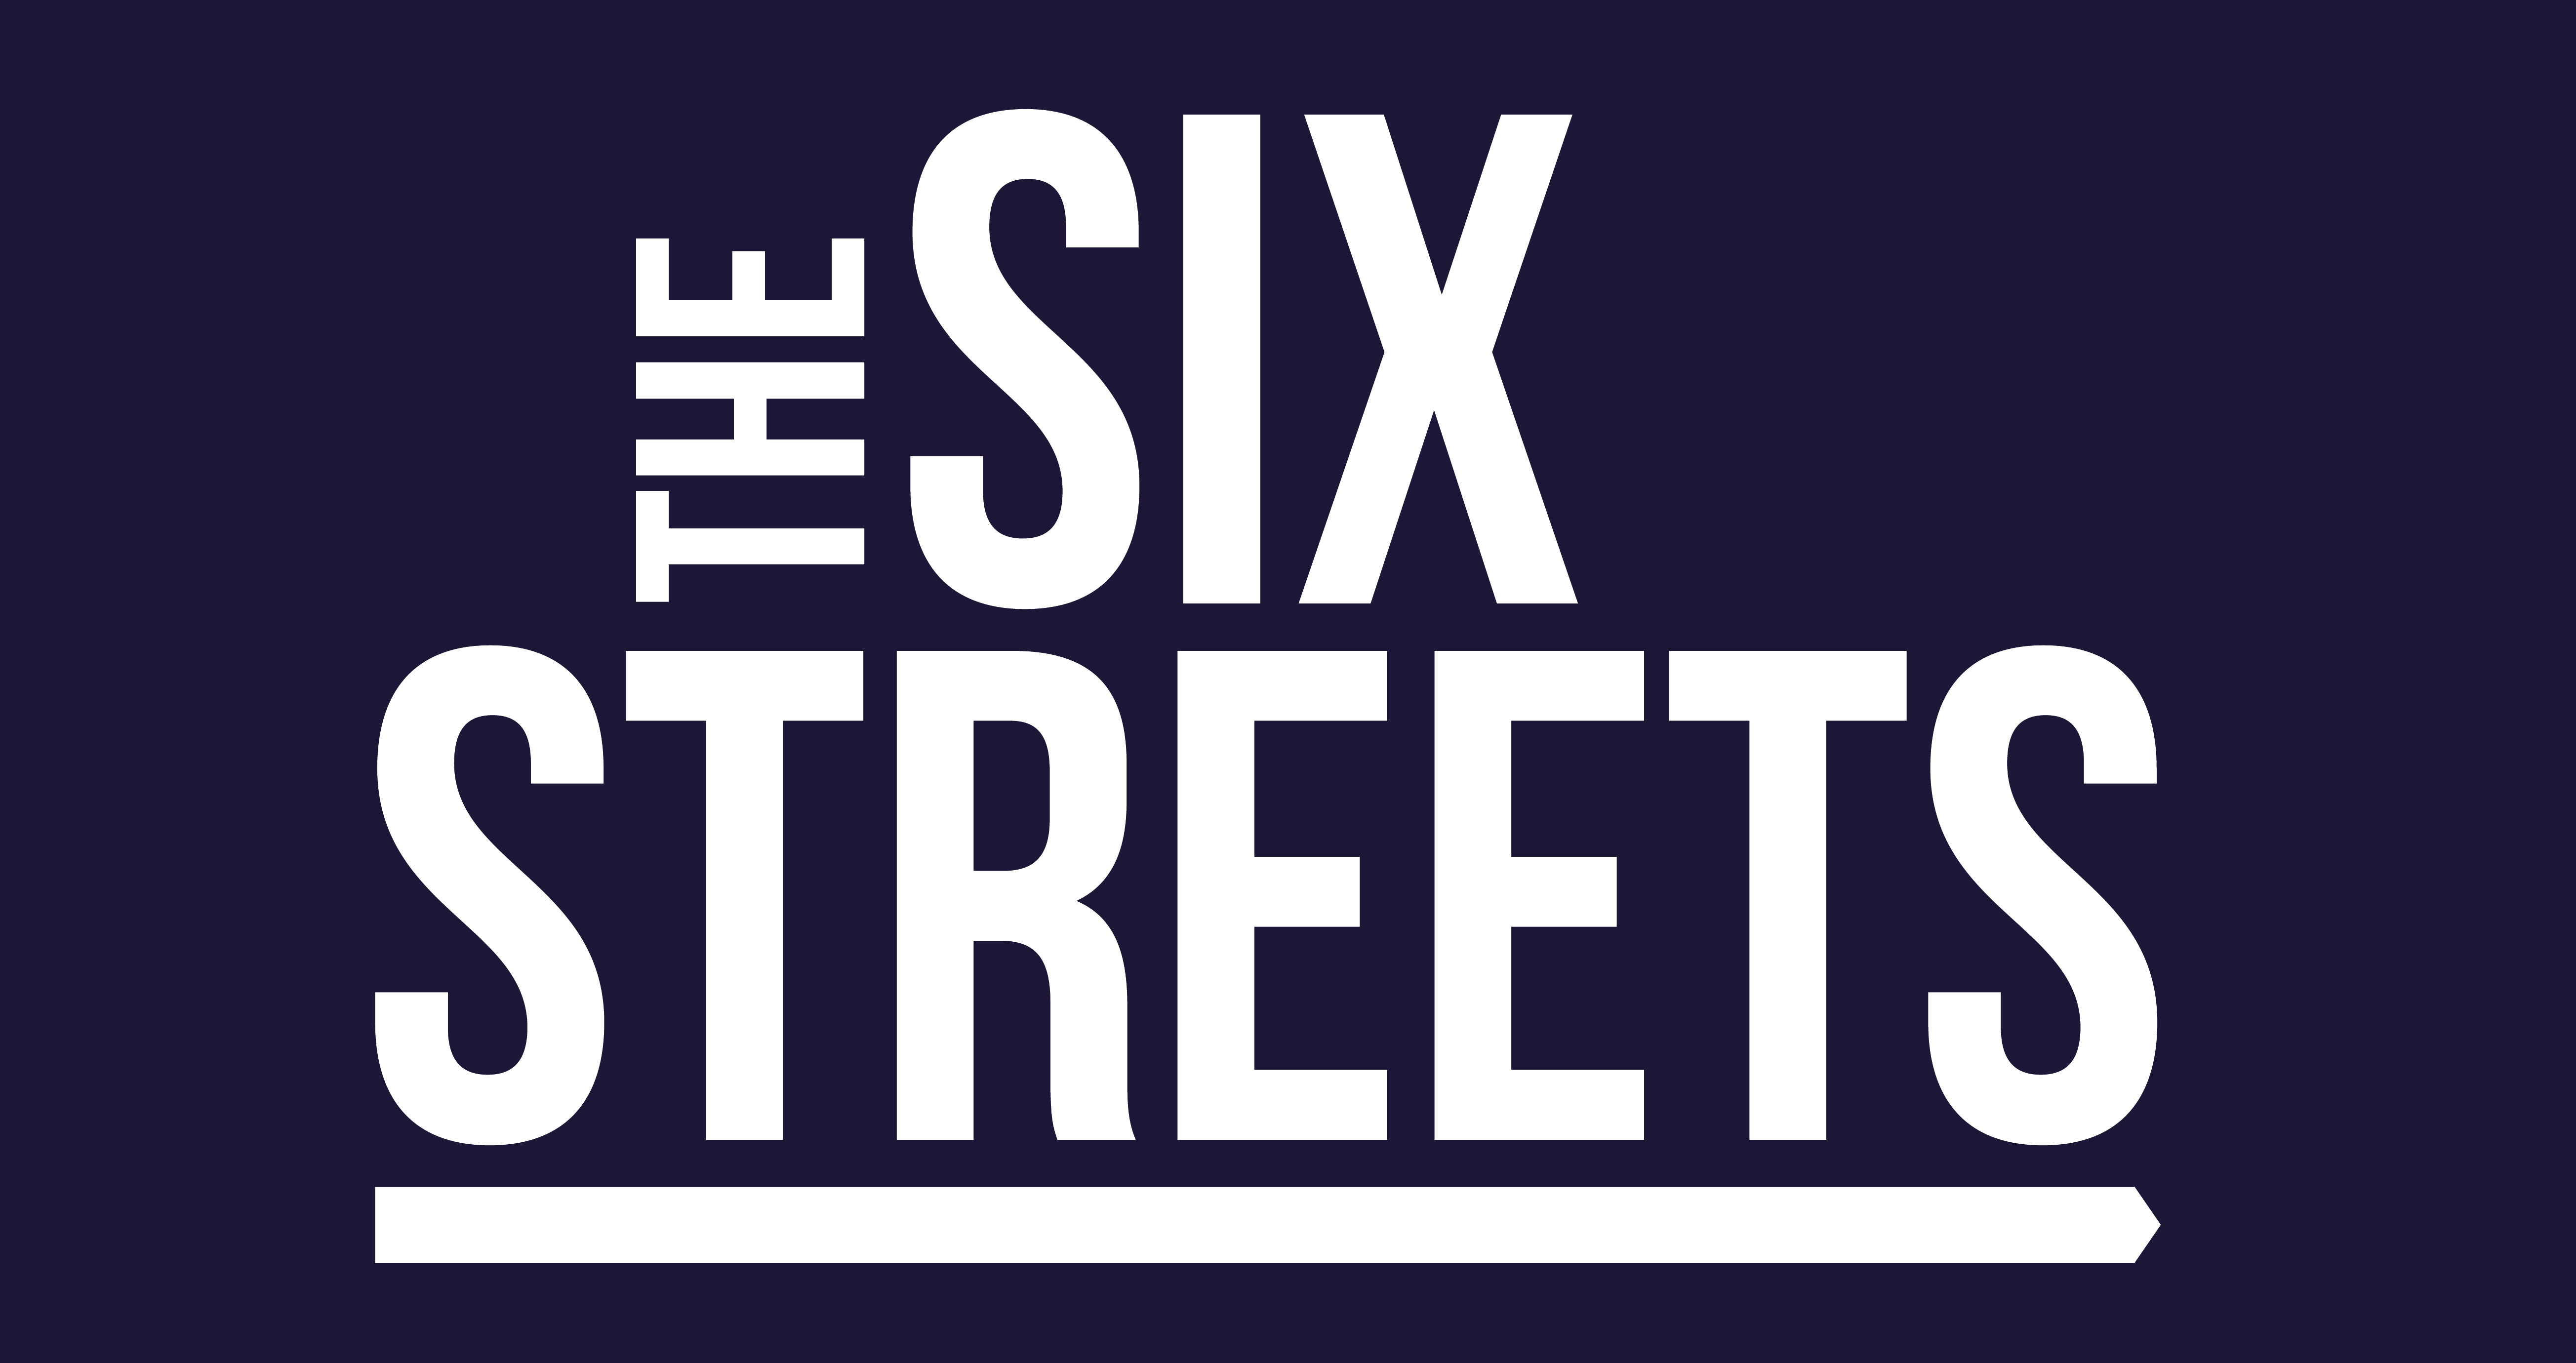 The Six Streets logo